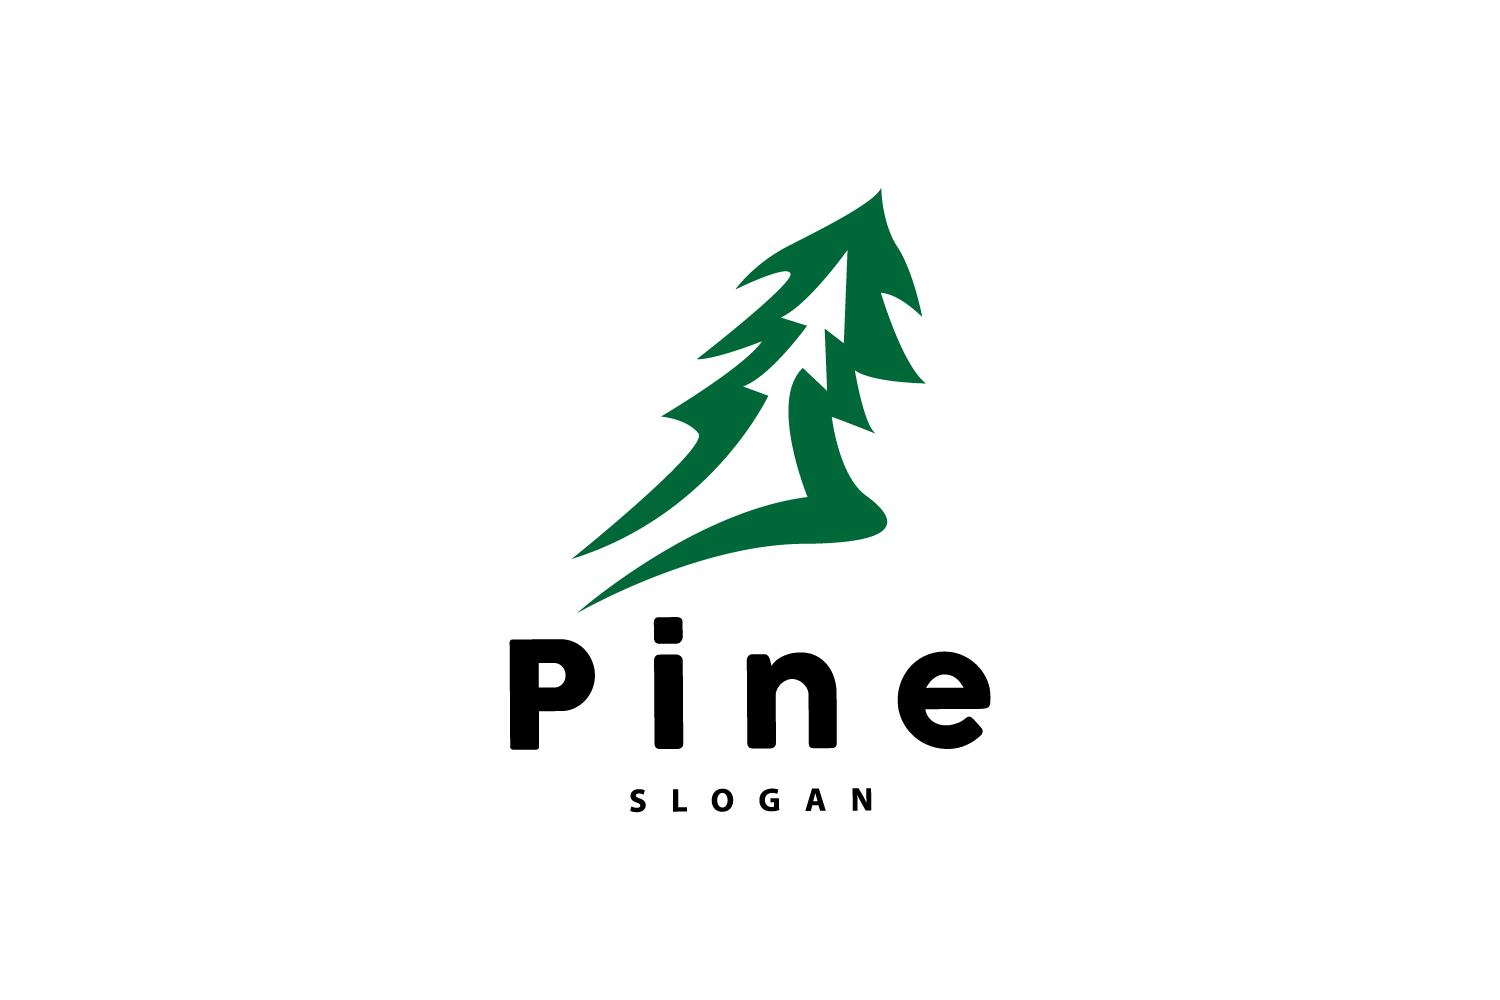 Pine Tree Logo Elegant Simple DesignV6